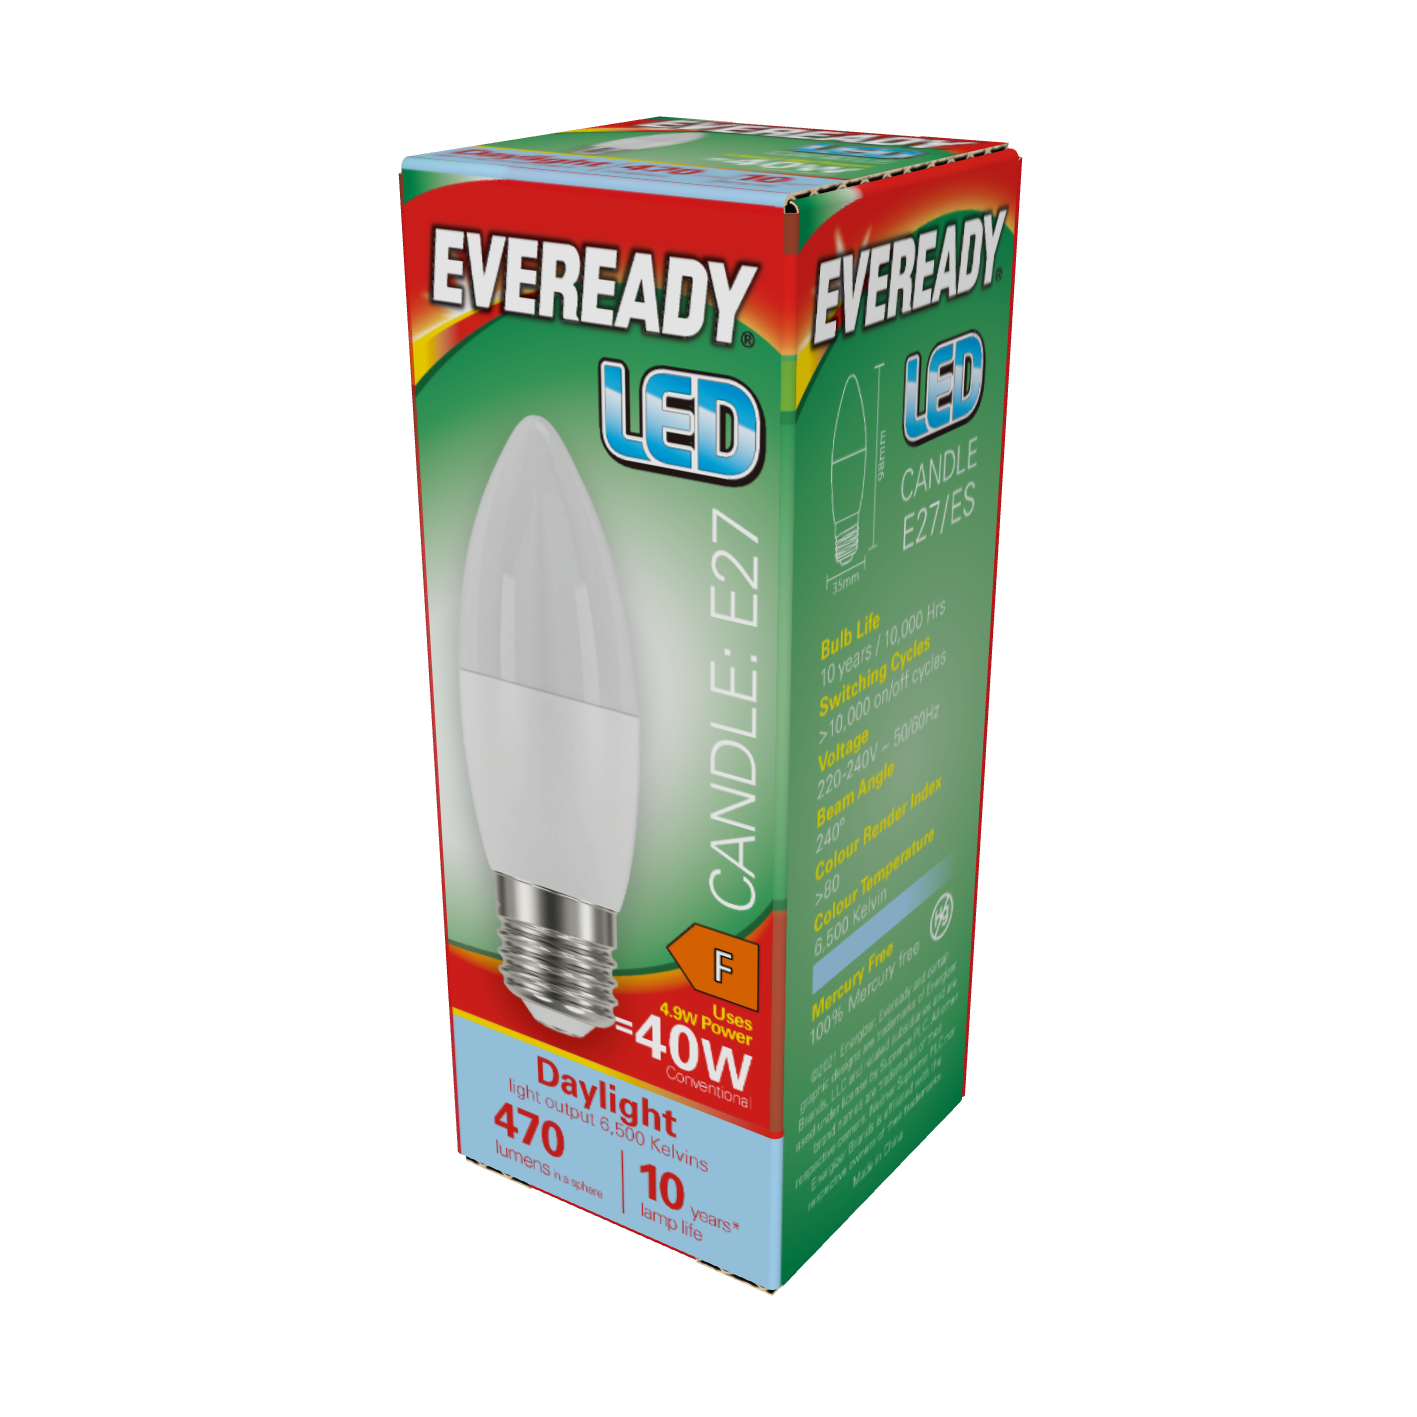 Eveready LED Candle E27 (ES) 470lm 4.9W 6,500K (Daylight), Box of 1